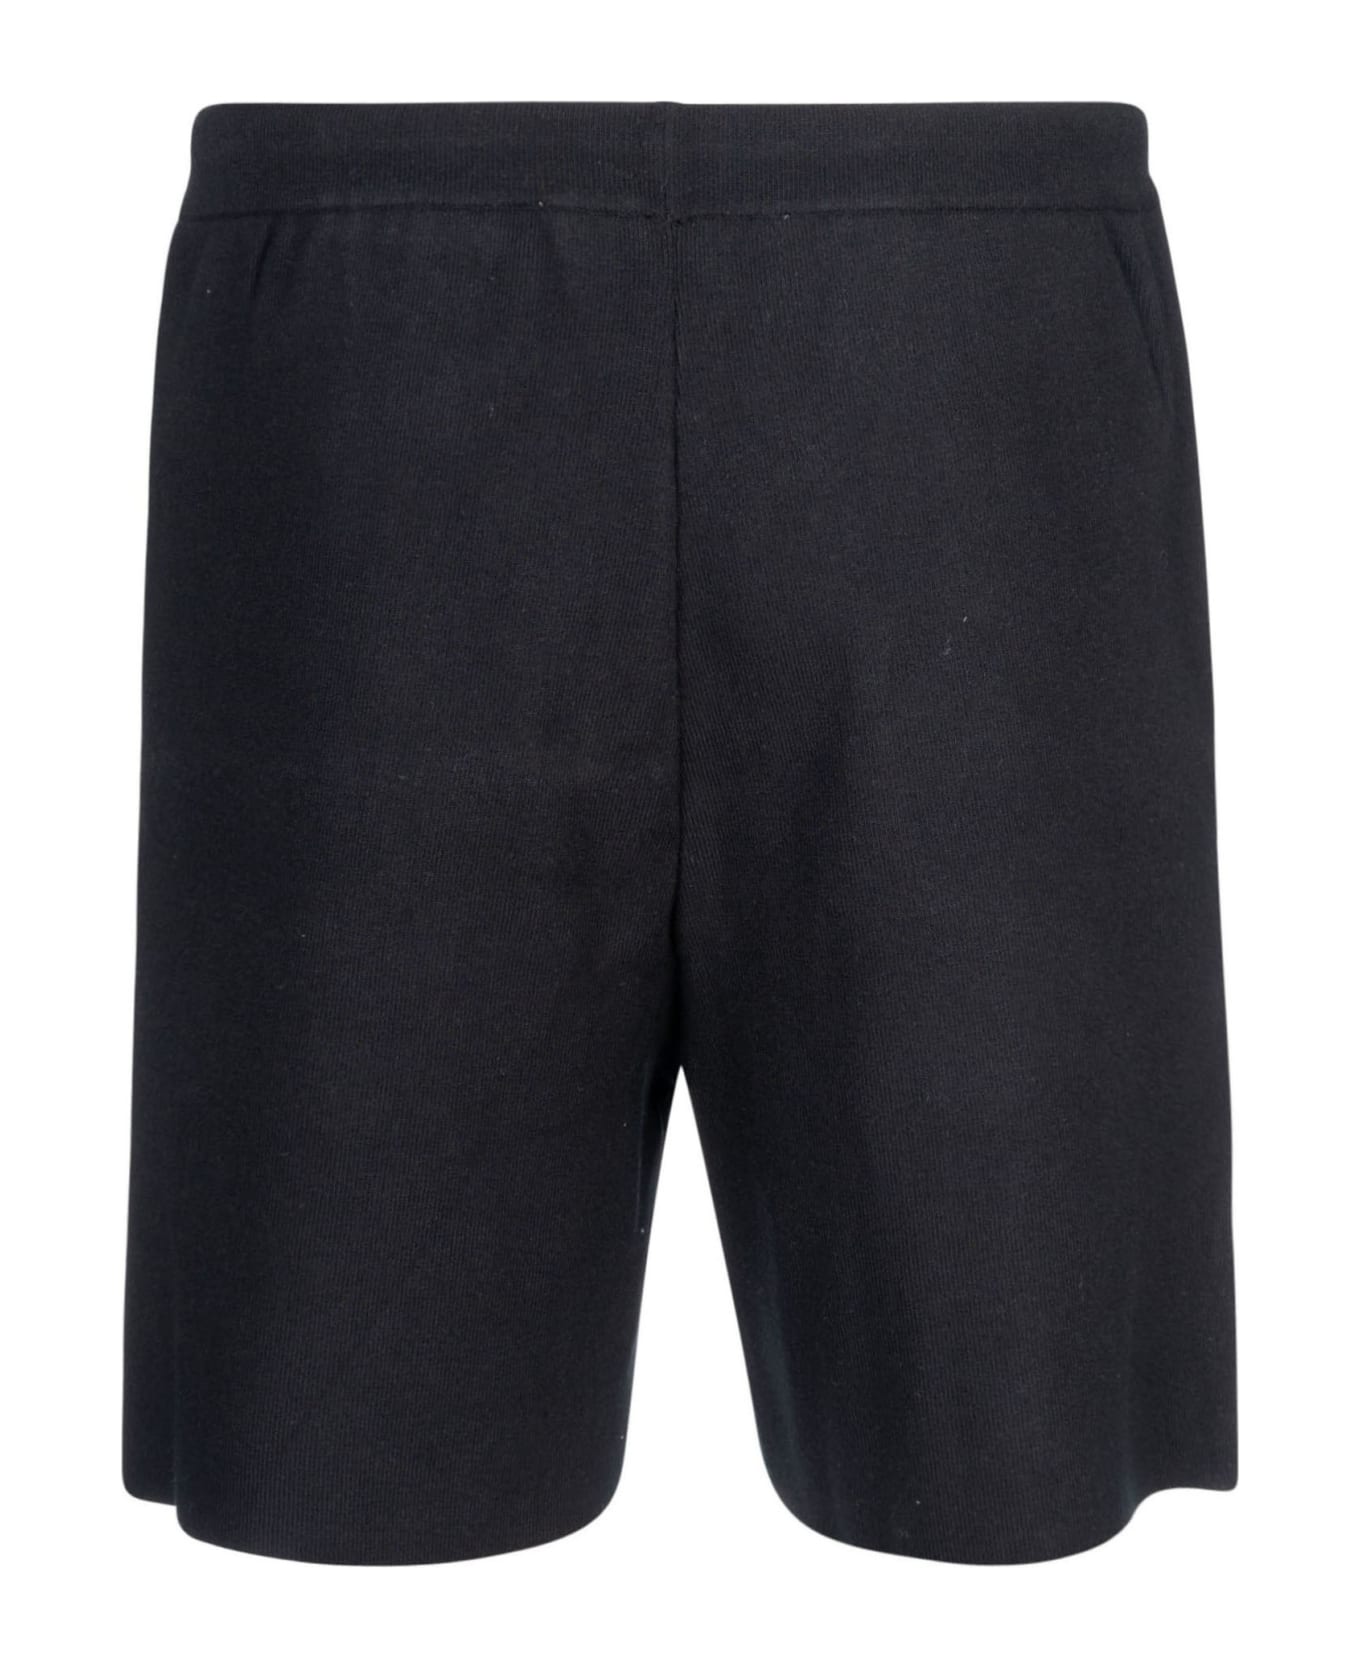 1017 ALYX 9SM Laced Shorts - Black ショートパンツ